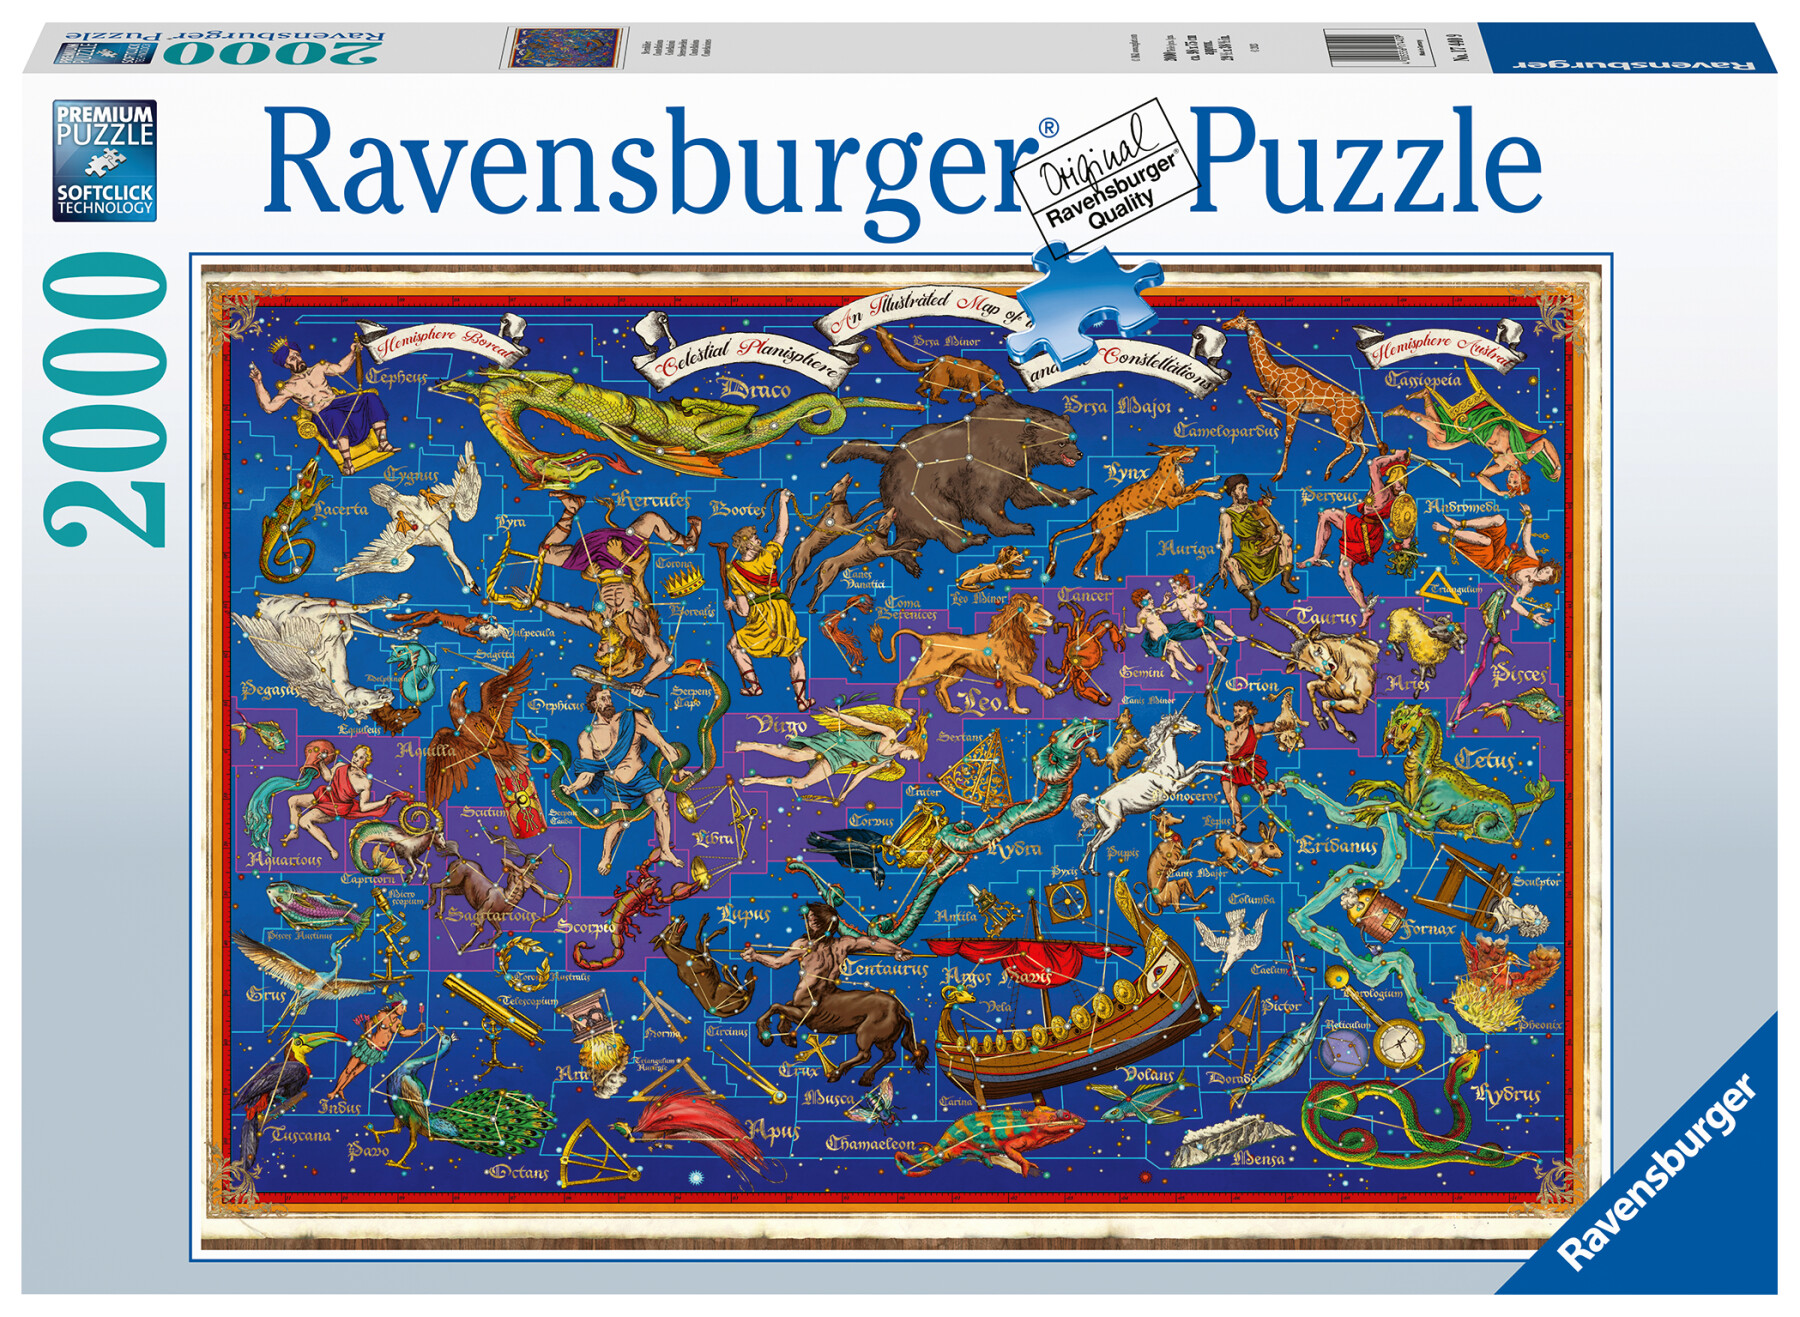 Ravensburger - puzzle costellazioni, 2000 pezzi, puzzle adulti - RAVENSBURGER